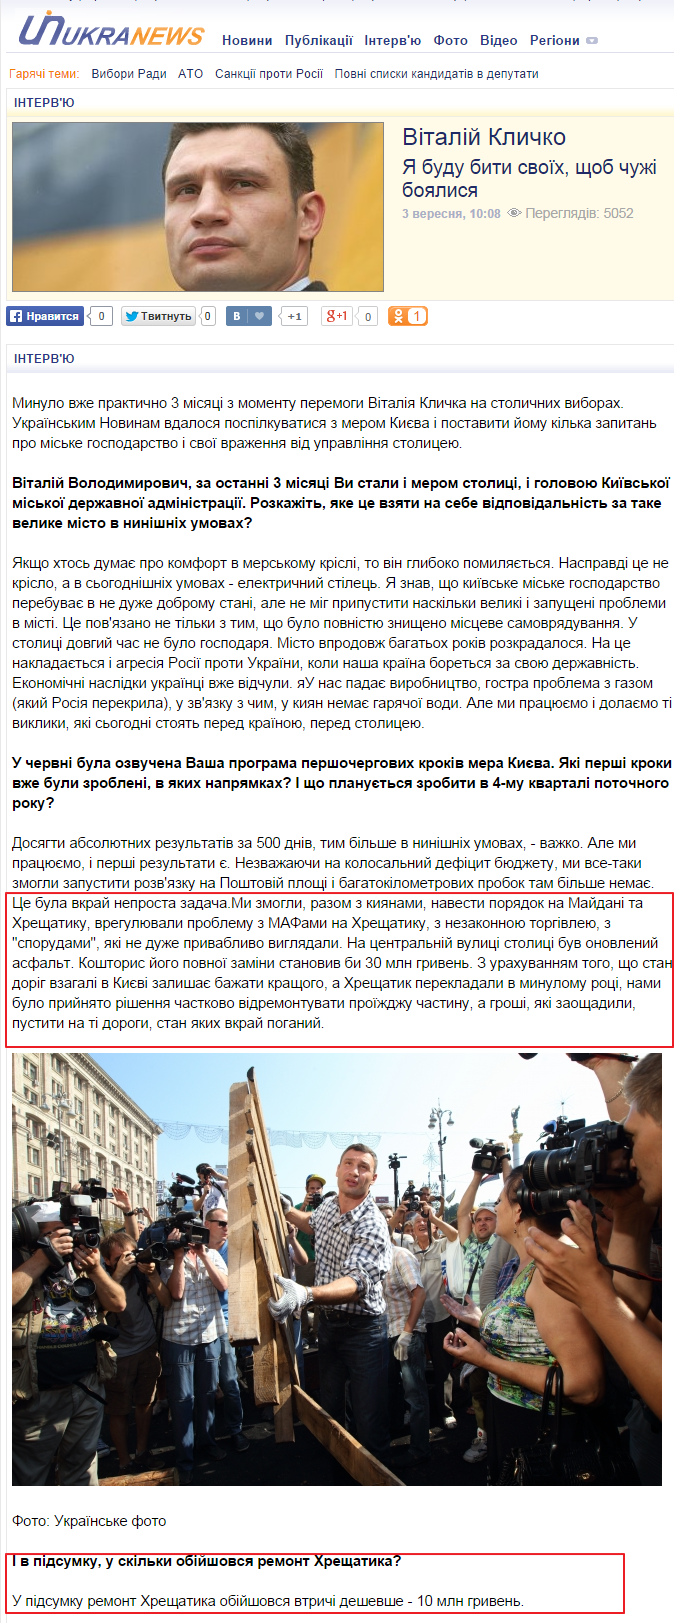 http://ukranews.com/uk/interview/2014/09/03/519